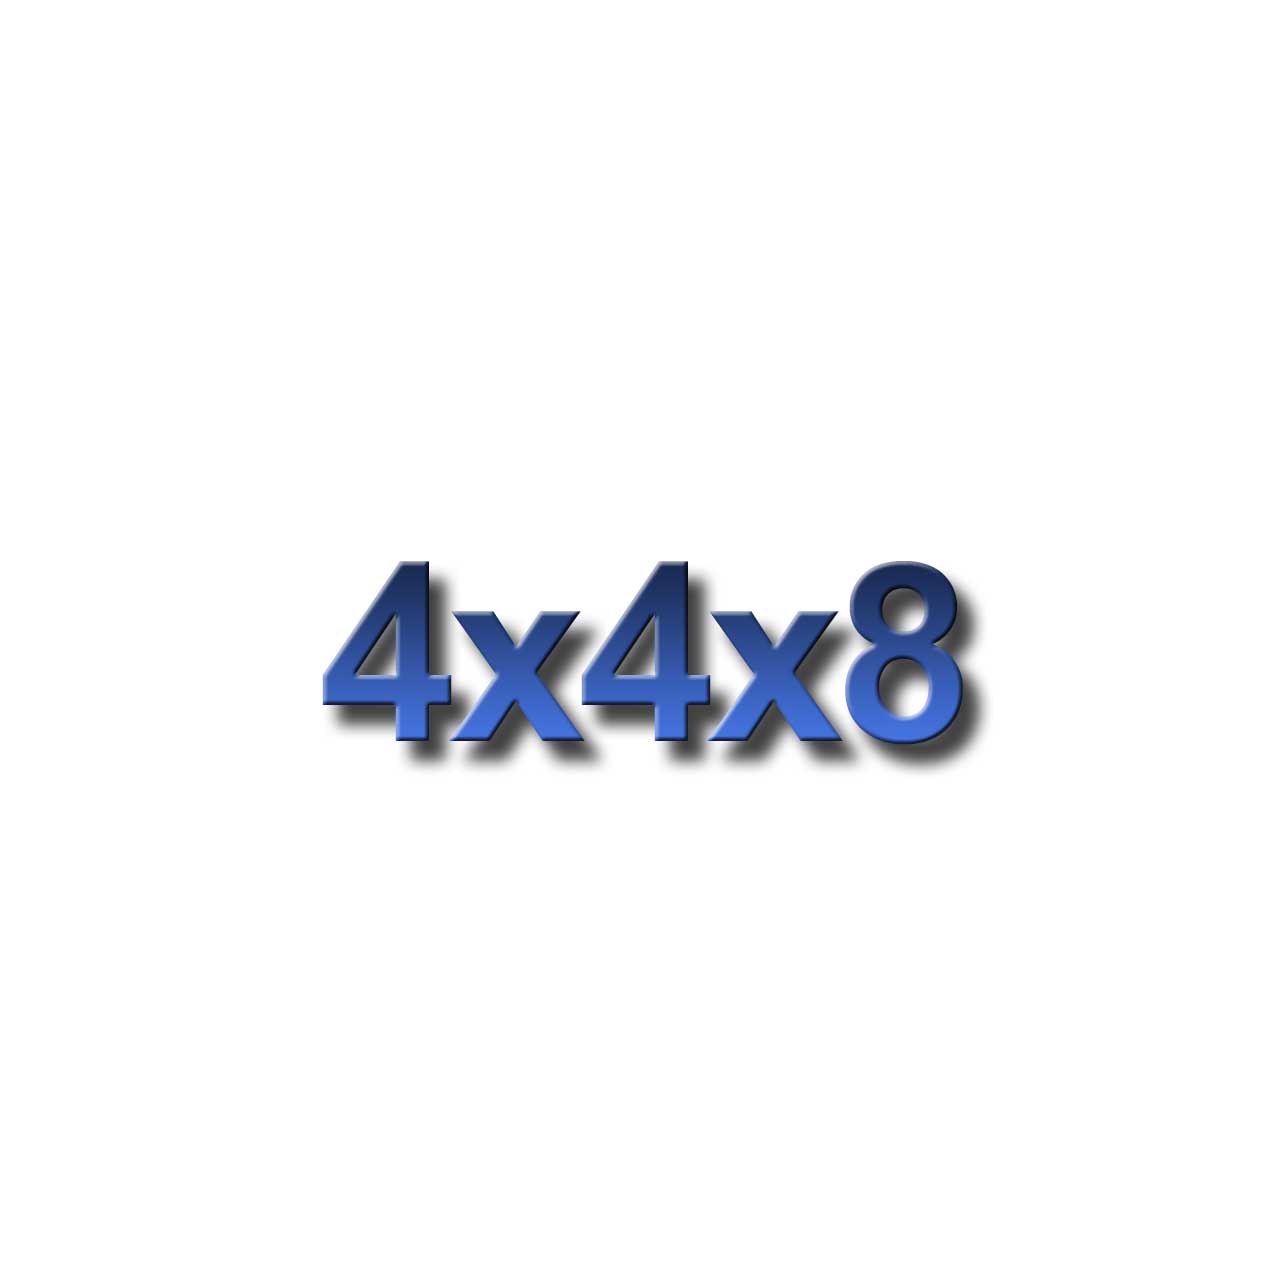 4x4x8